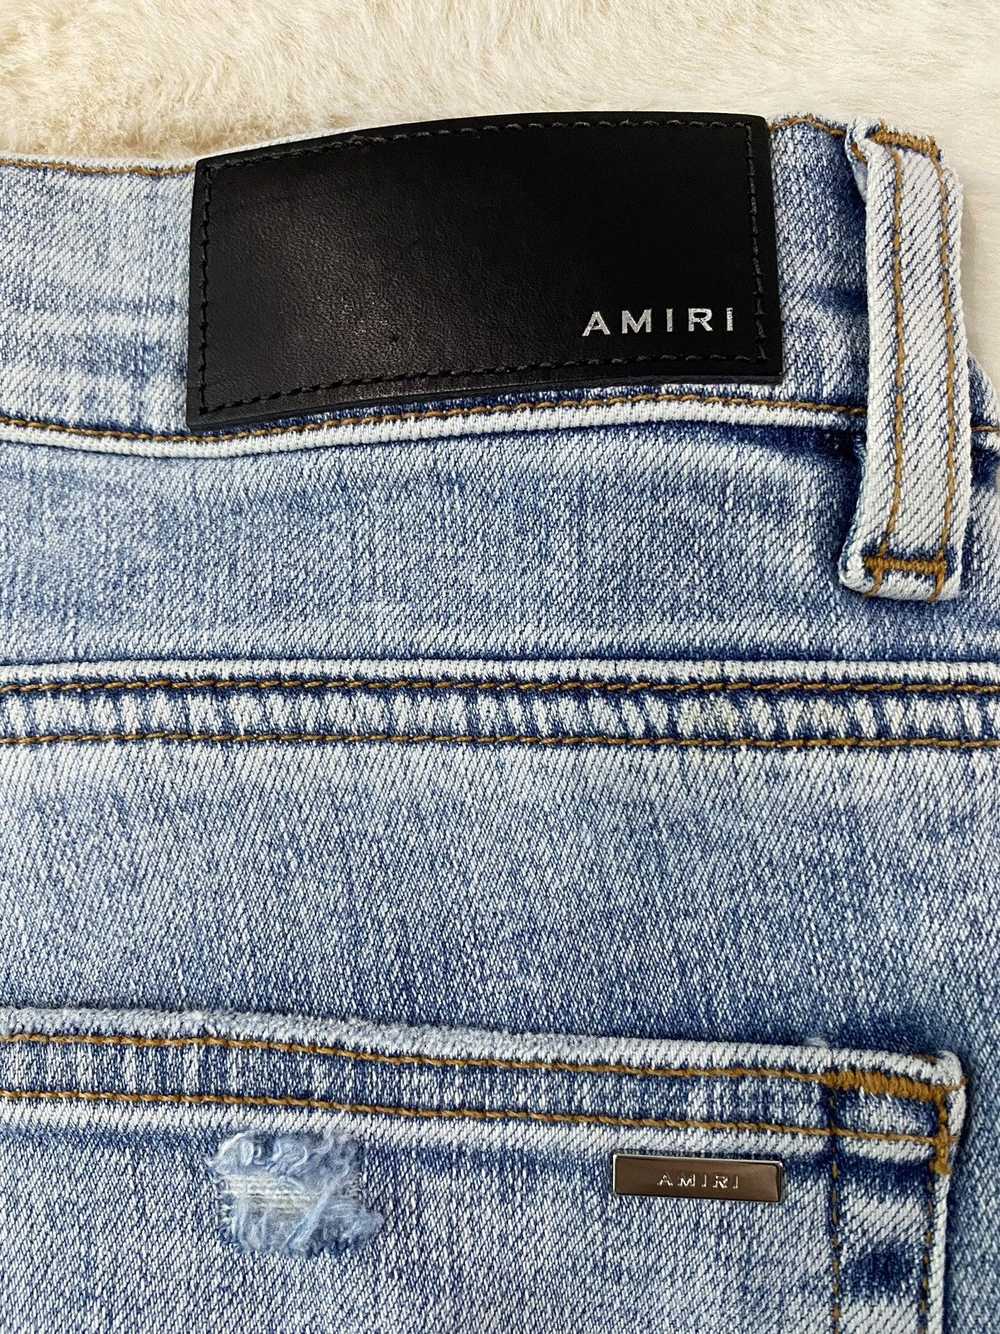 Amiri Amiri Sky Indigo White Bandana MX1 Jeans - image 3